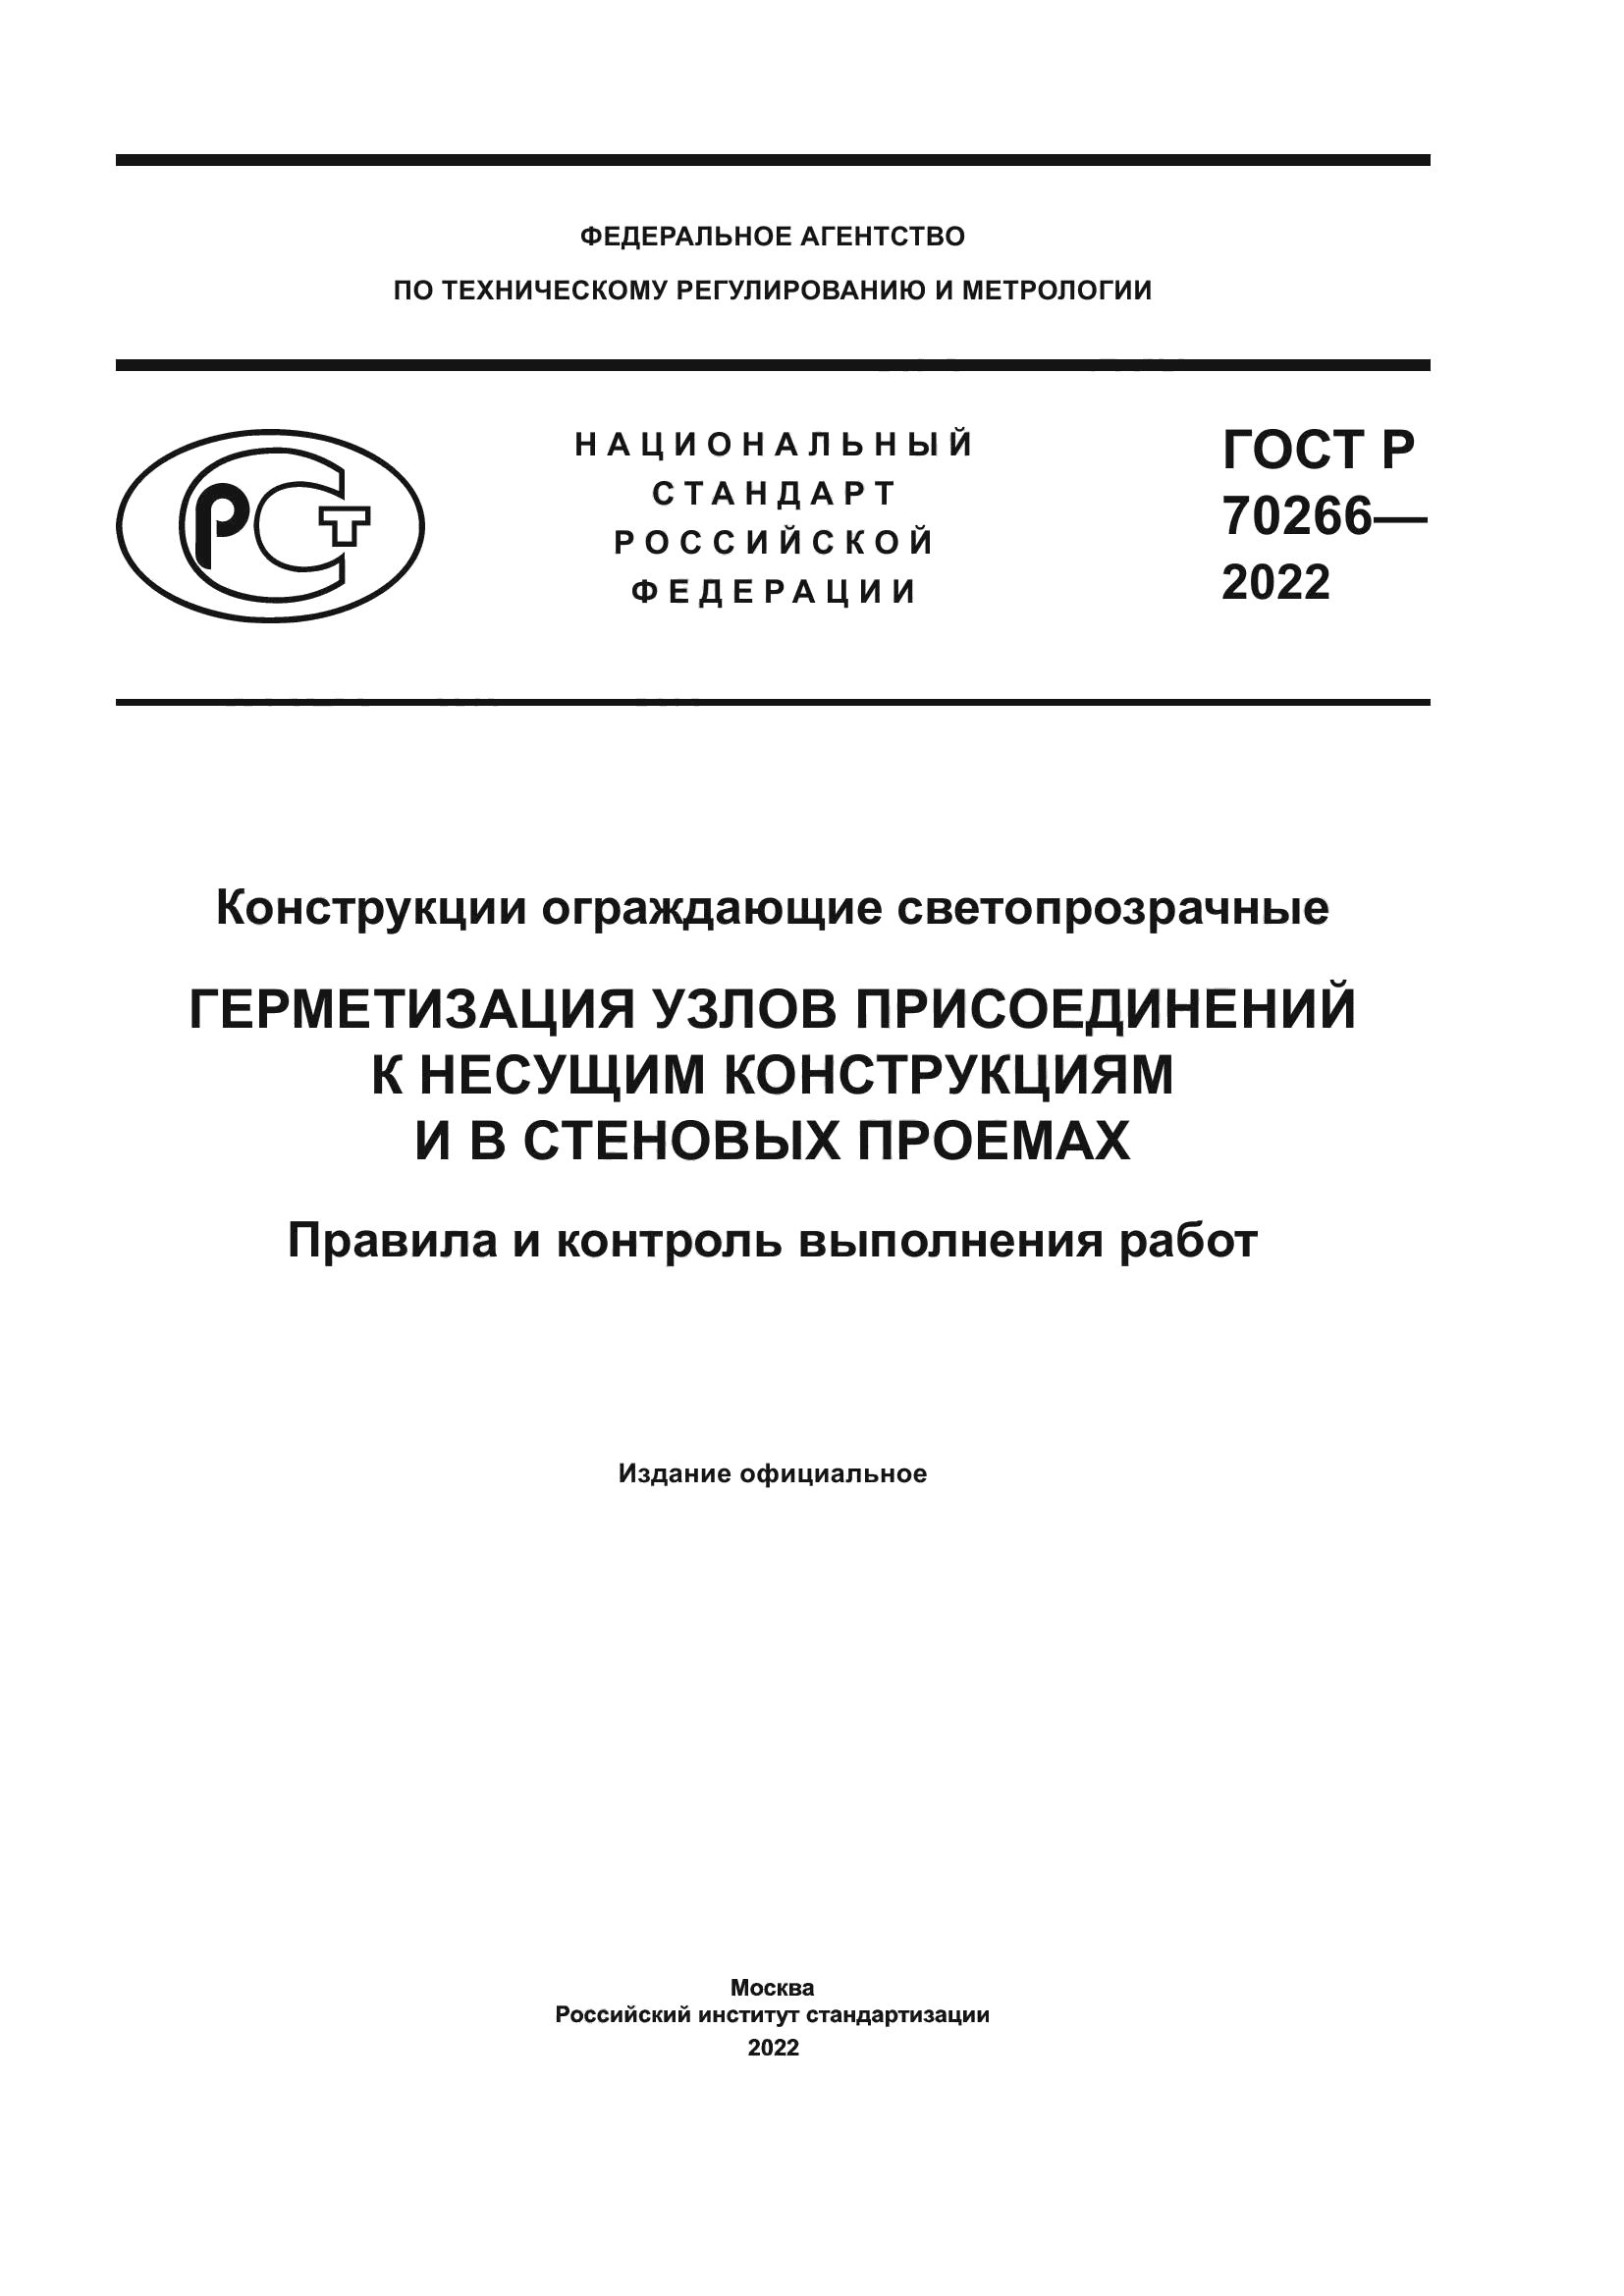 ГОСТ Р 70266-2022